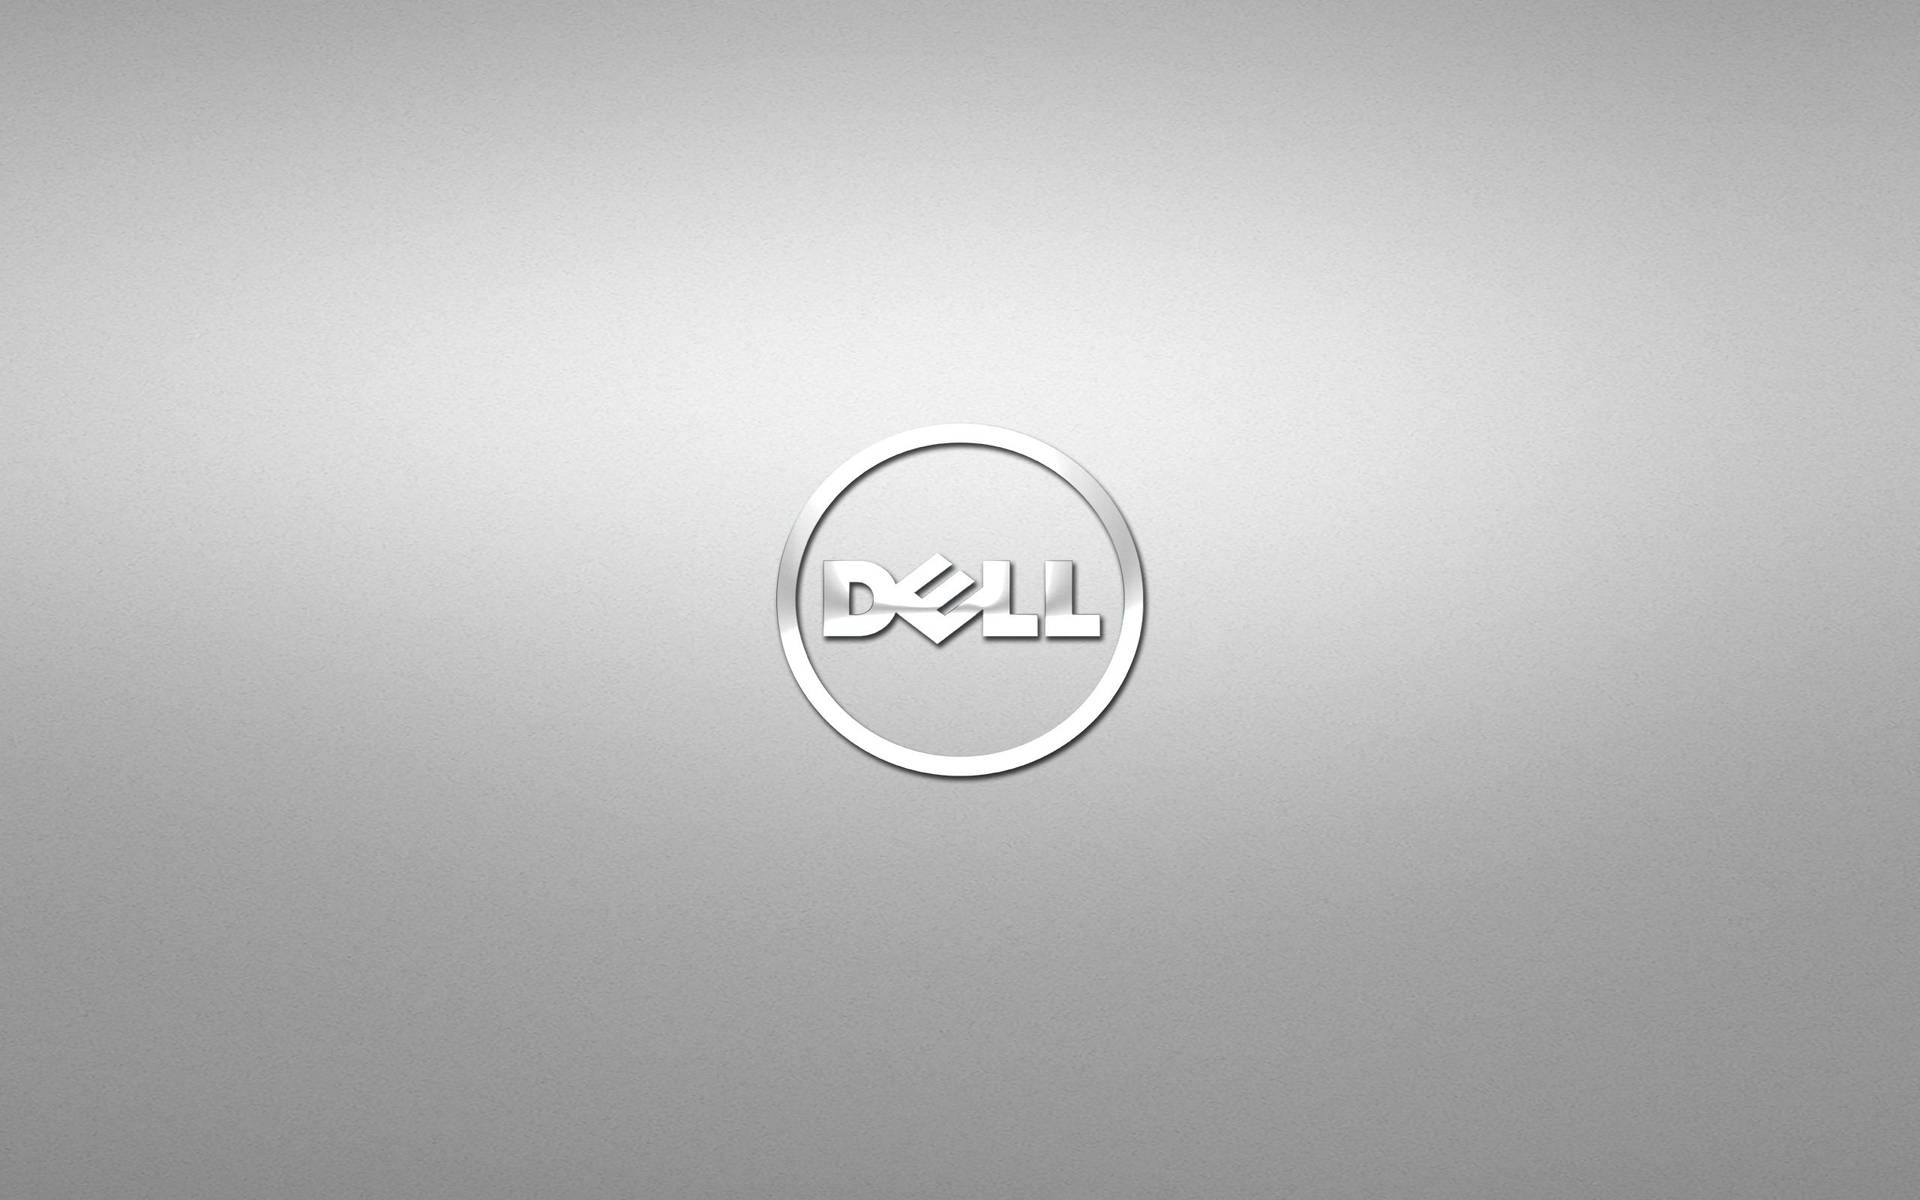 Silver Dell Hd Logo Background